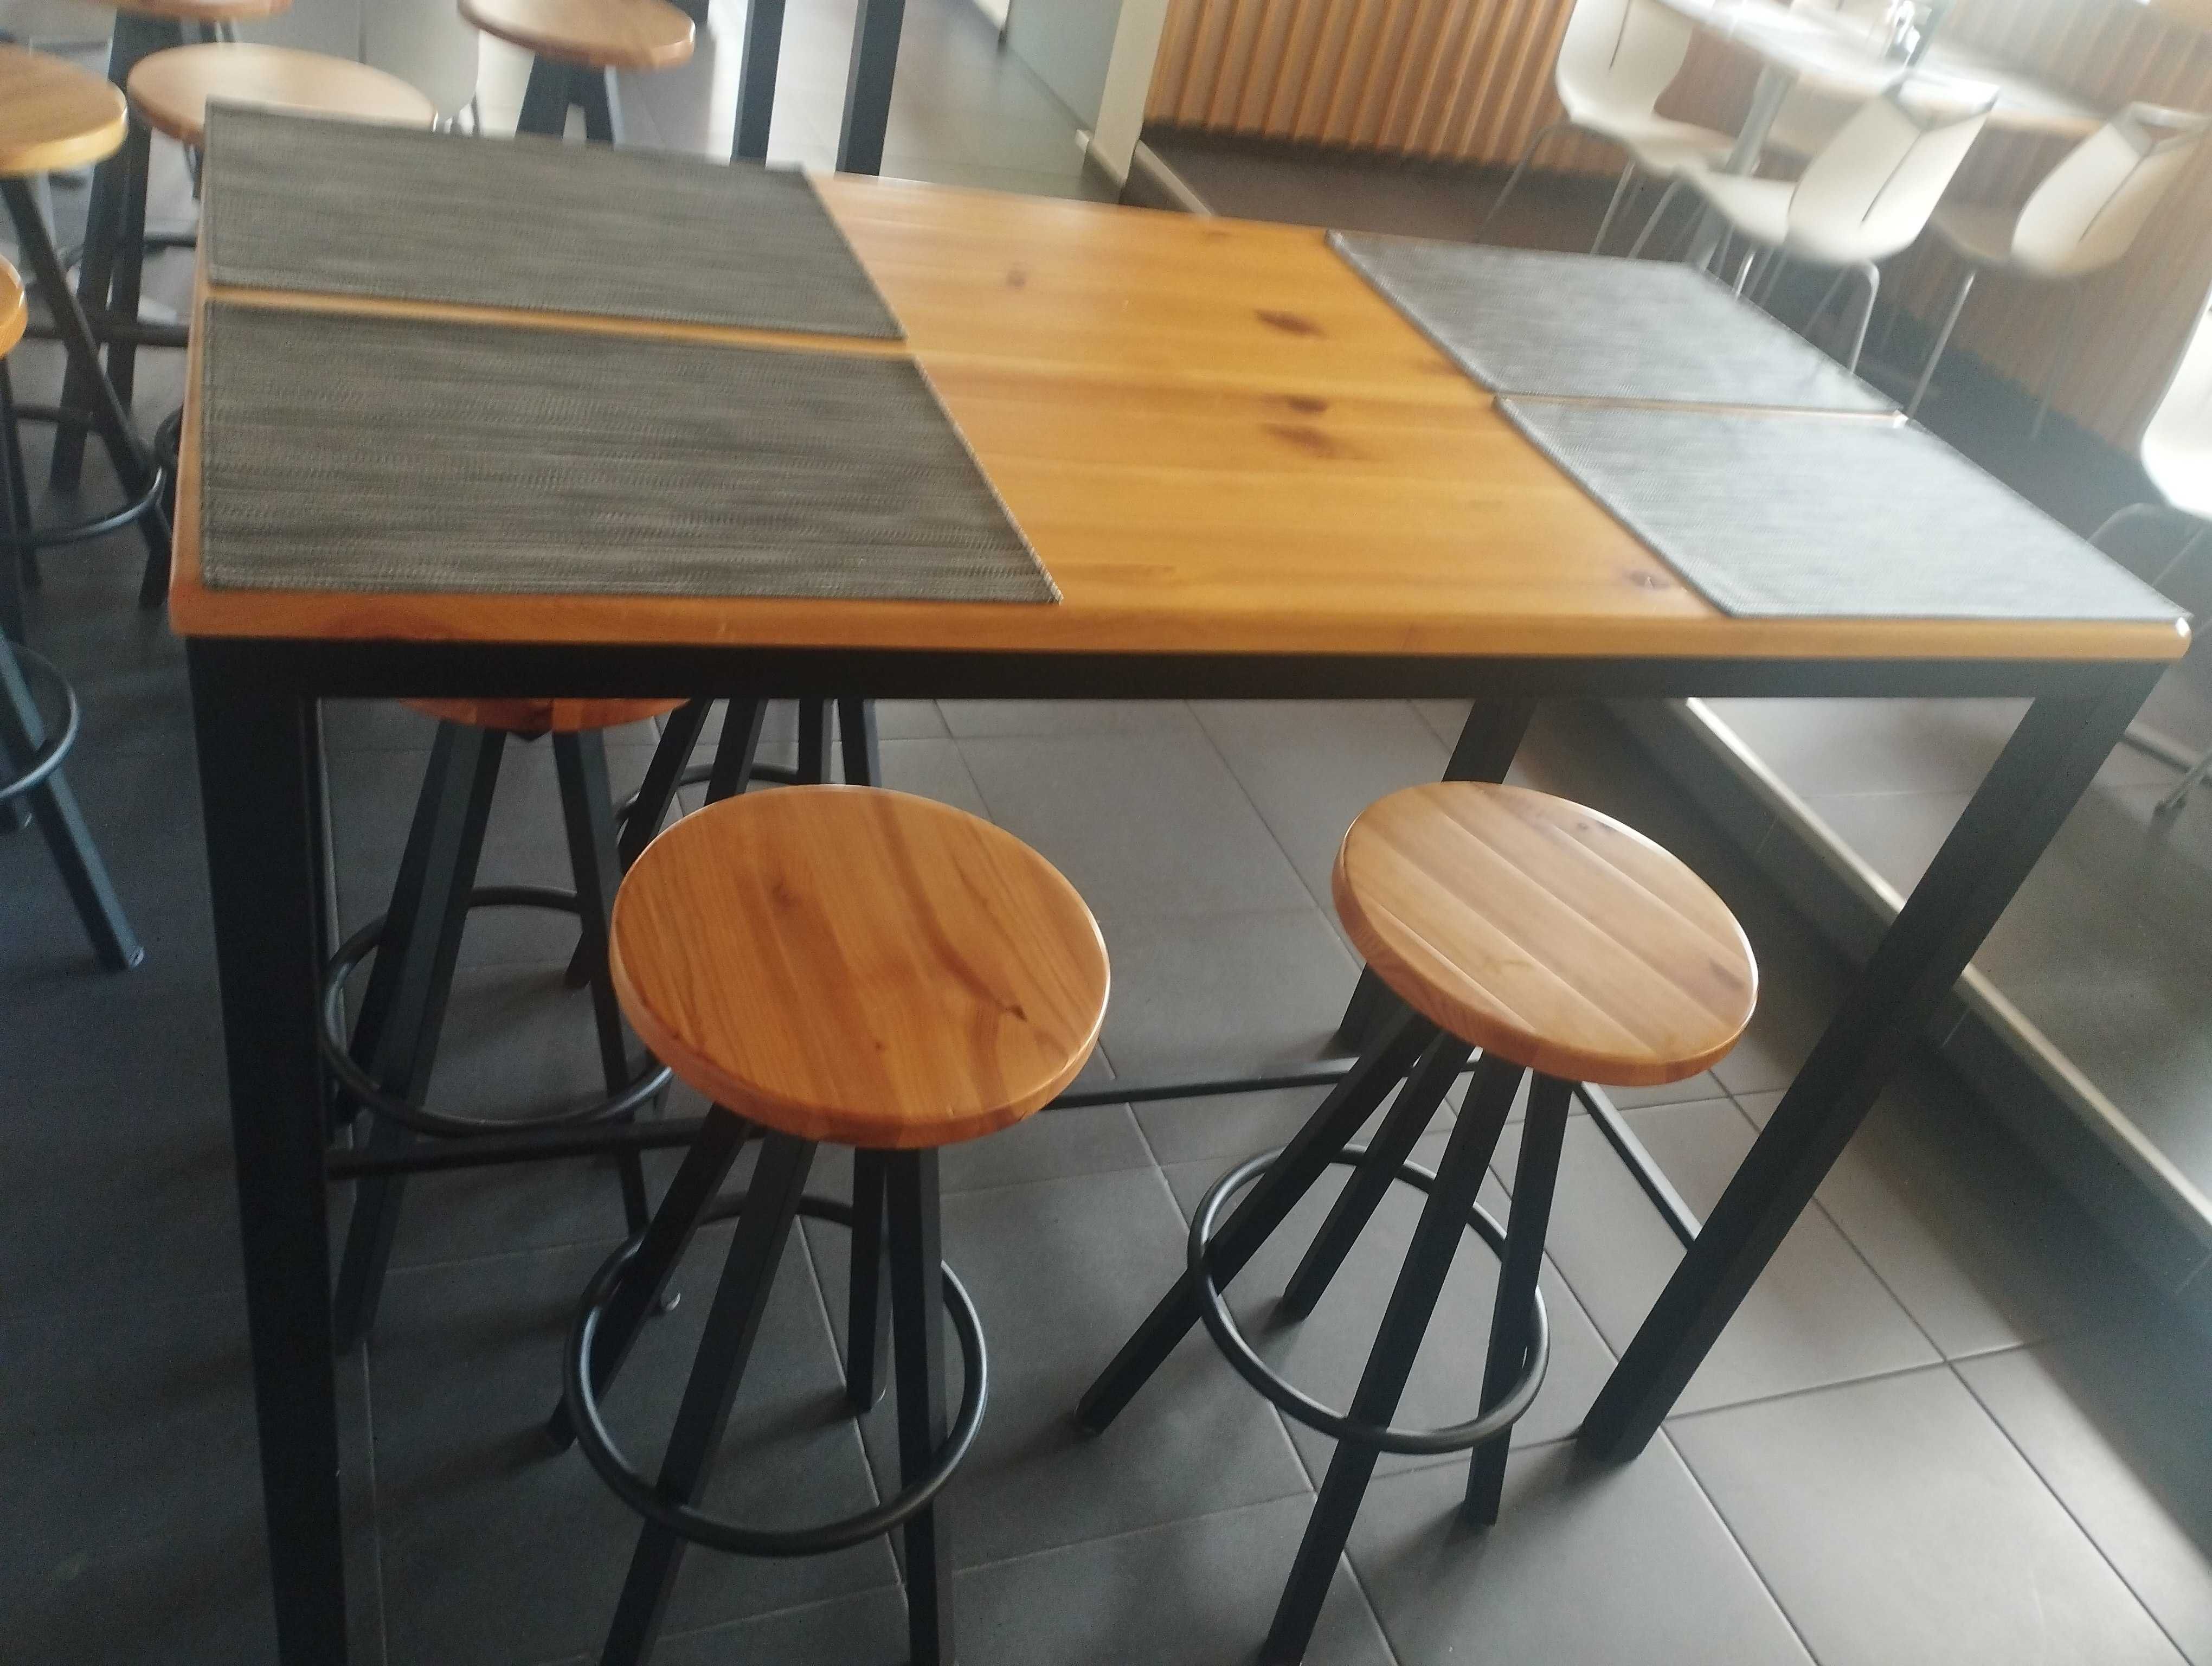 Mesa para café, esplanada, casa,bar etc